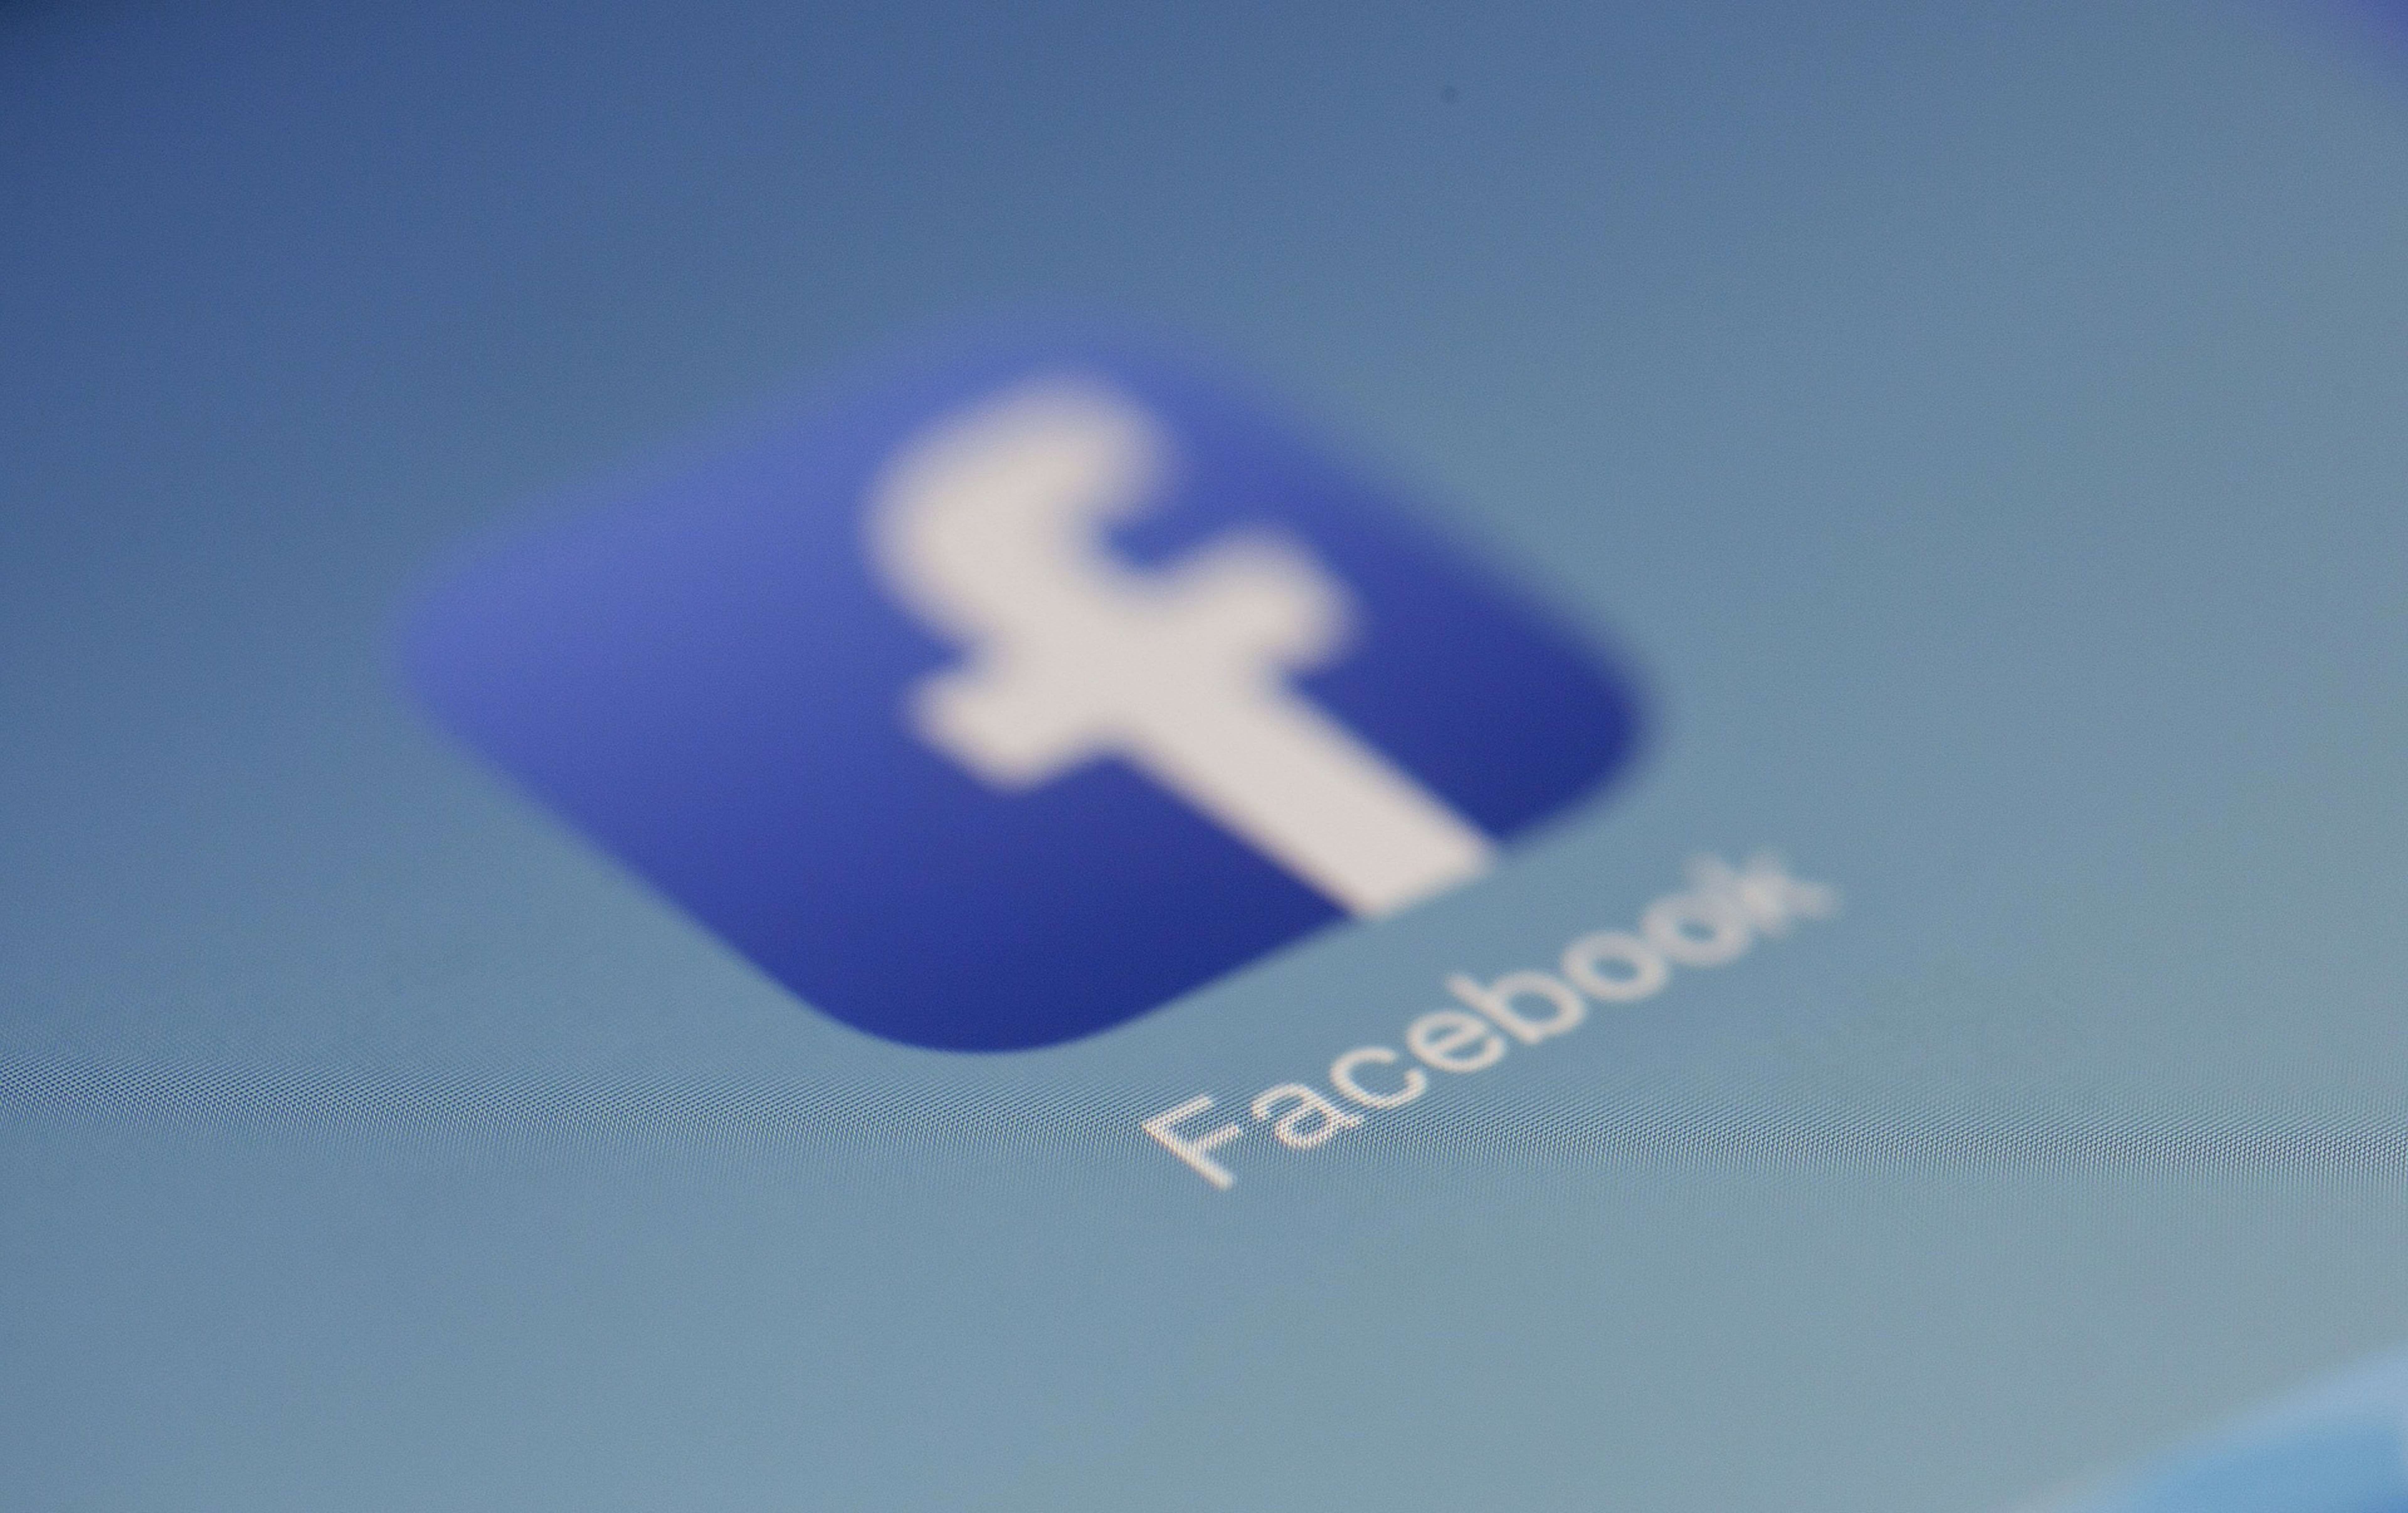 Facebook Postpones Ticker Change To MVRS: What Investors Should Know